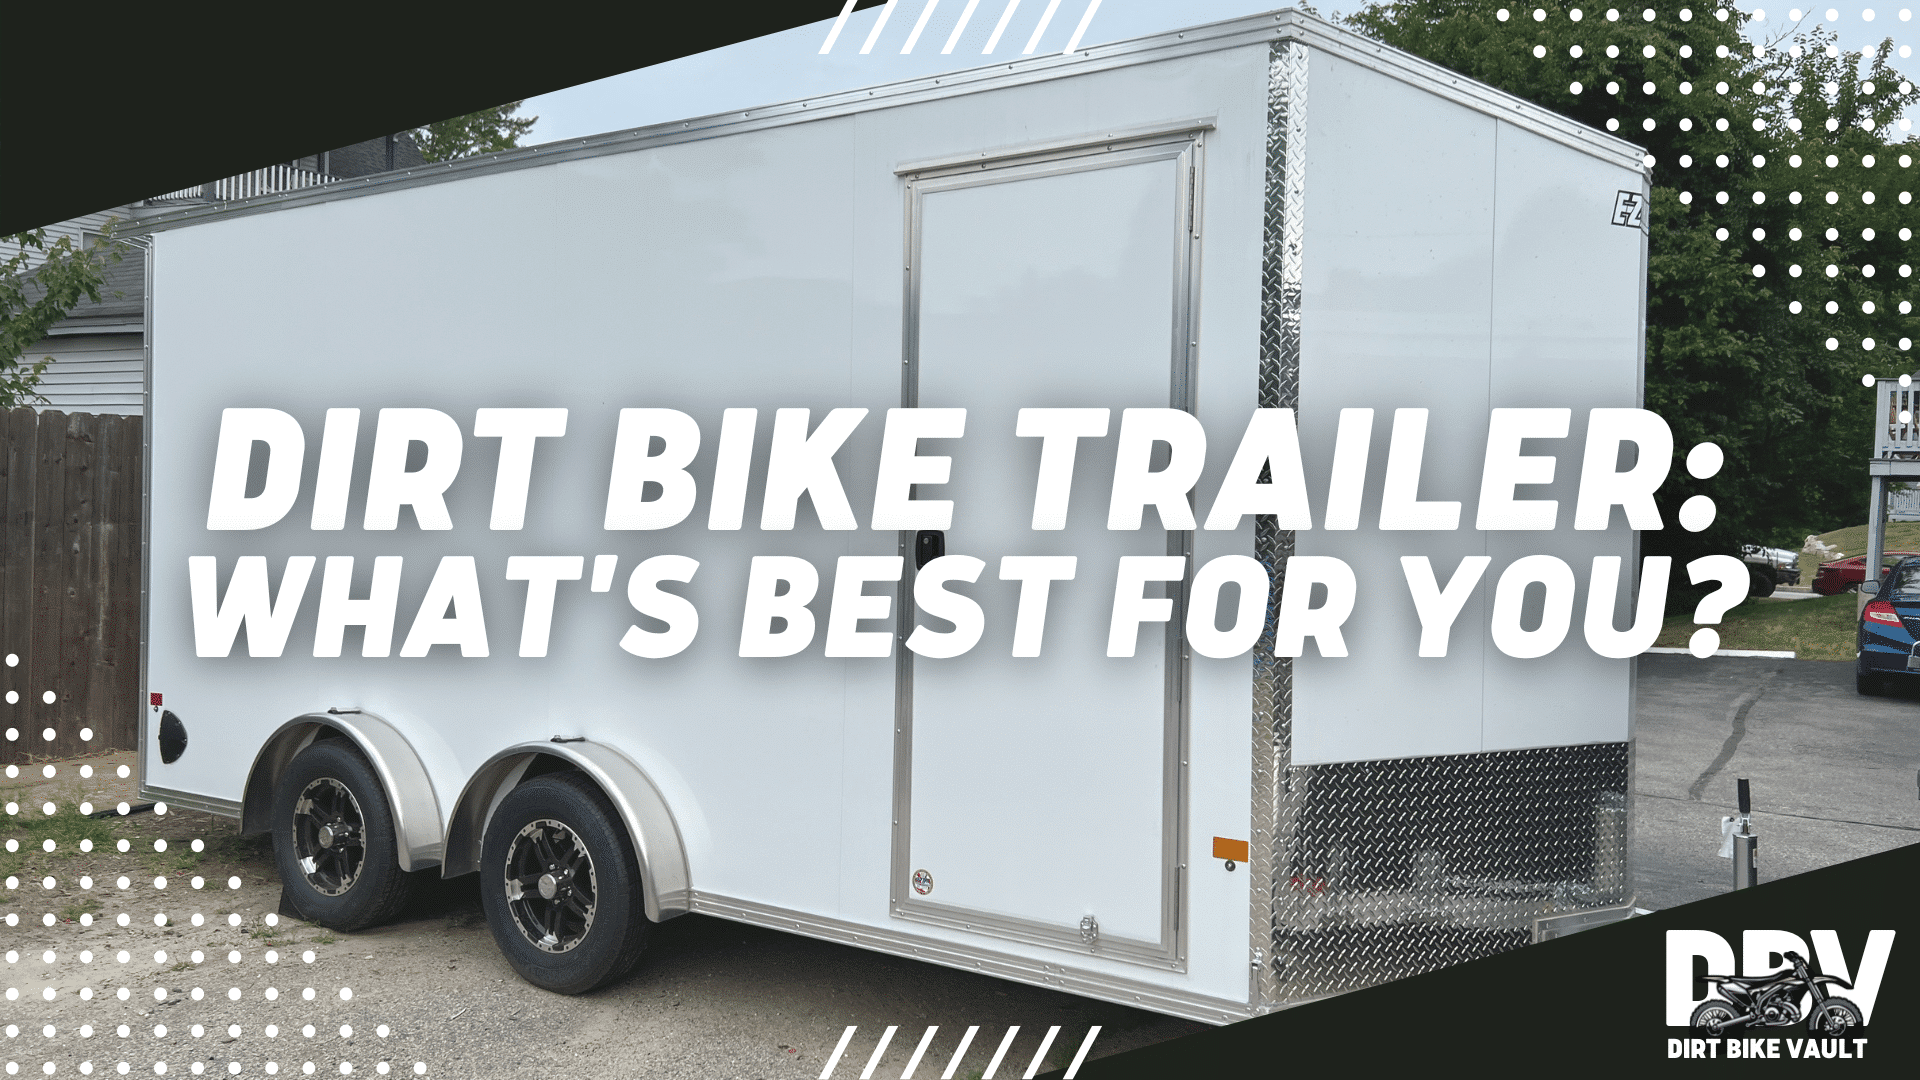 Dirt bike trailer